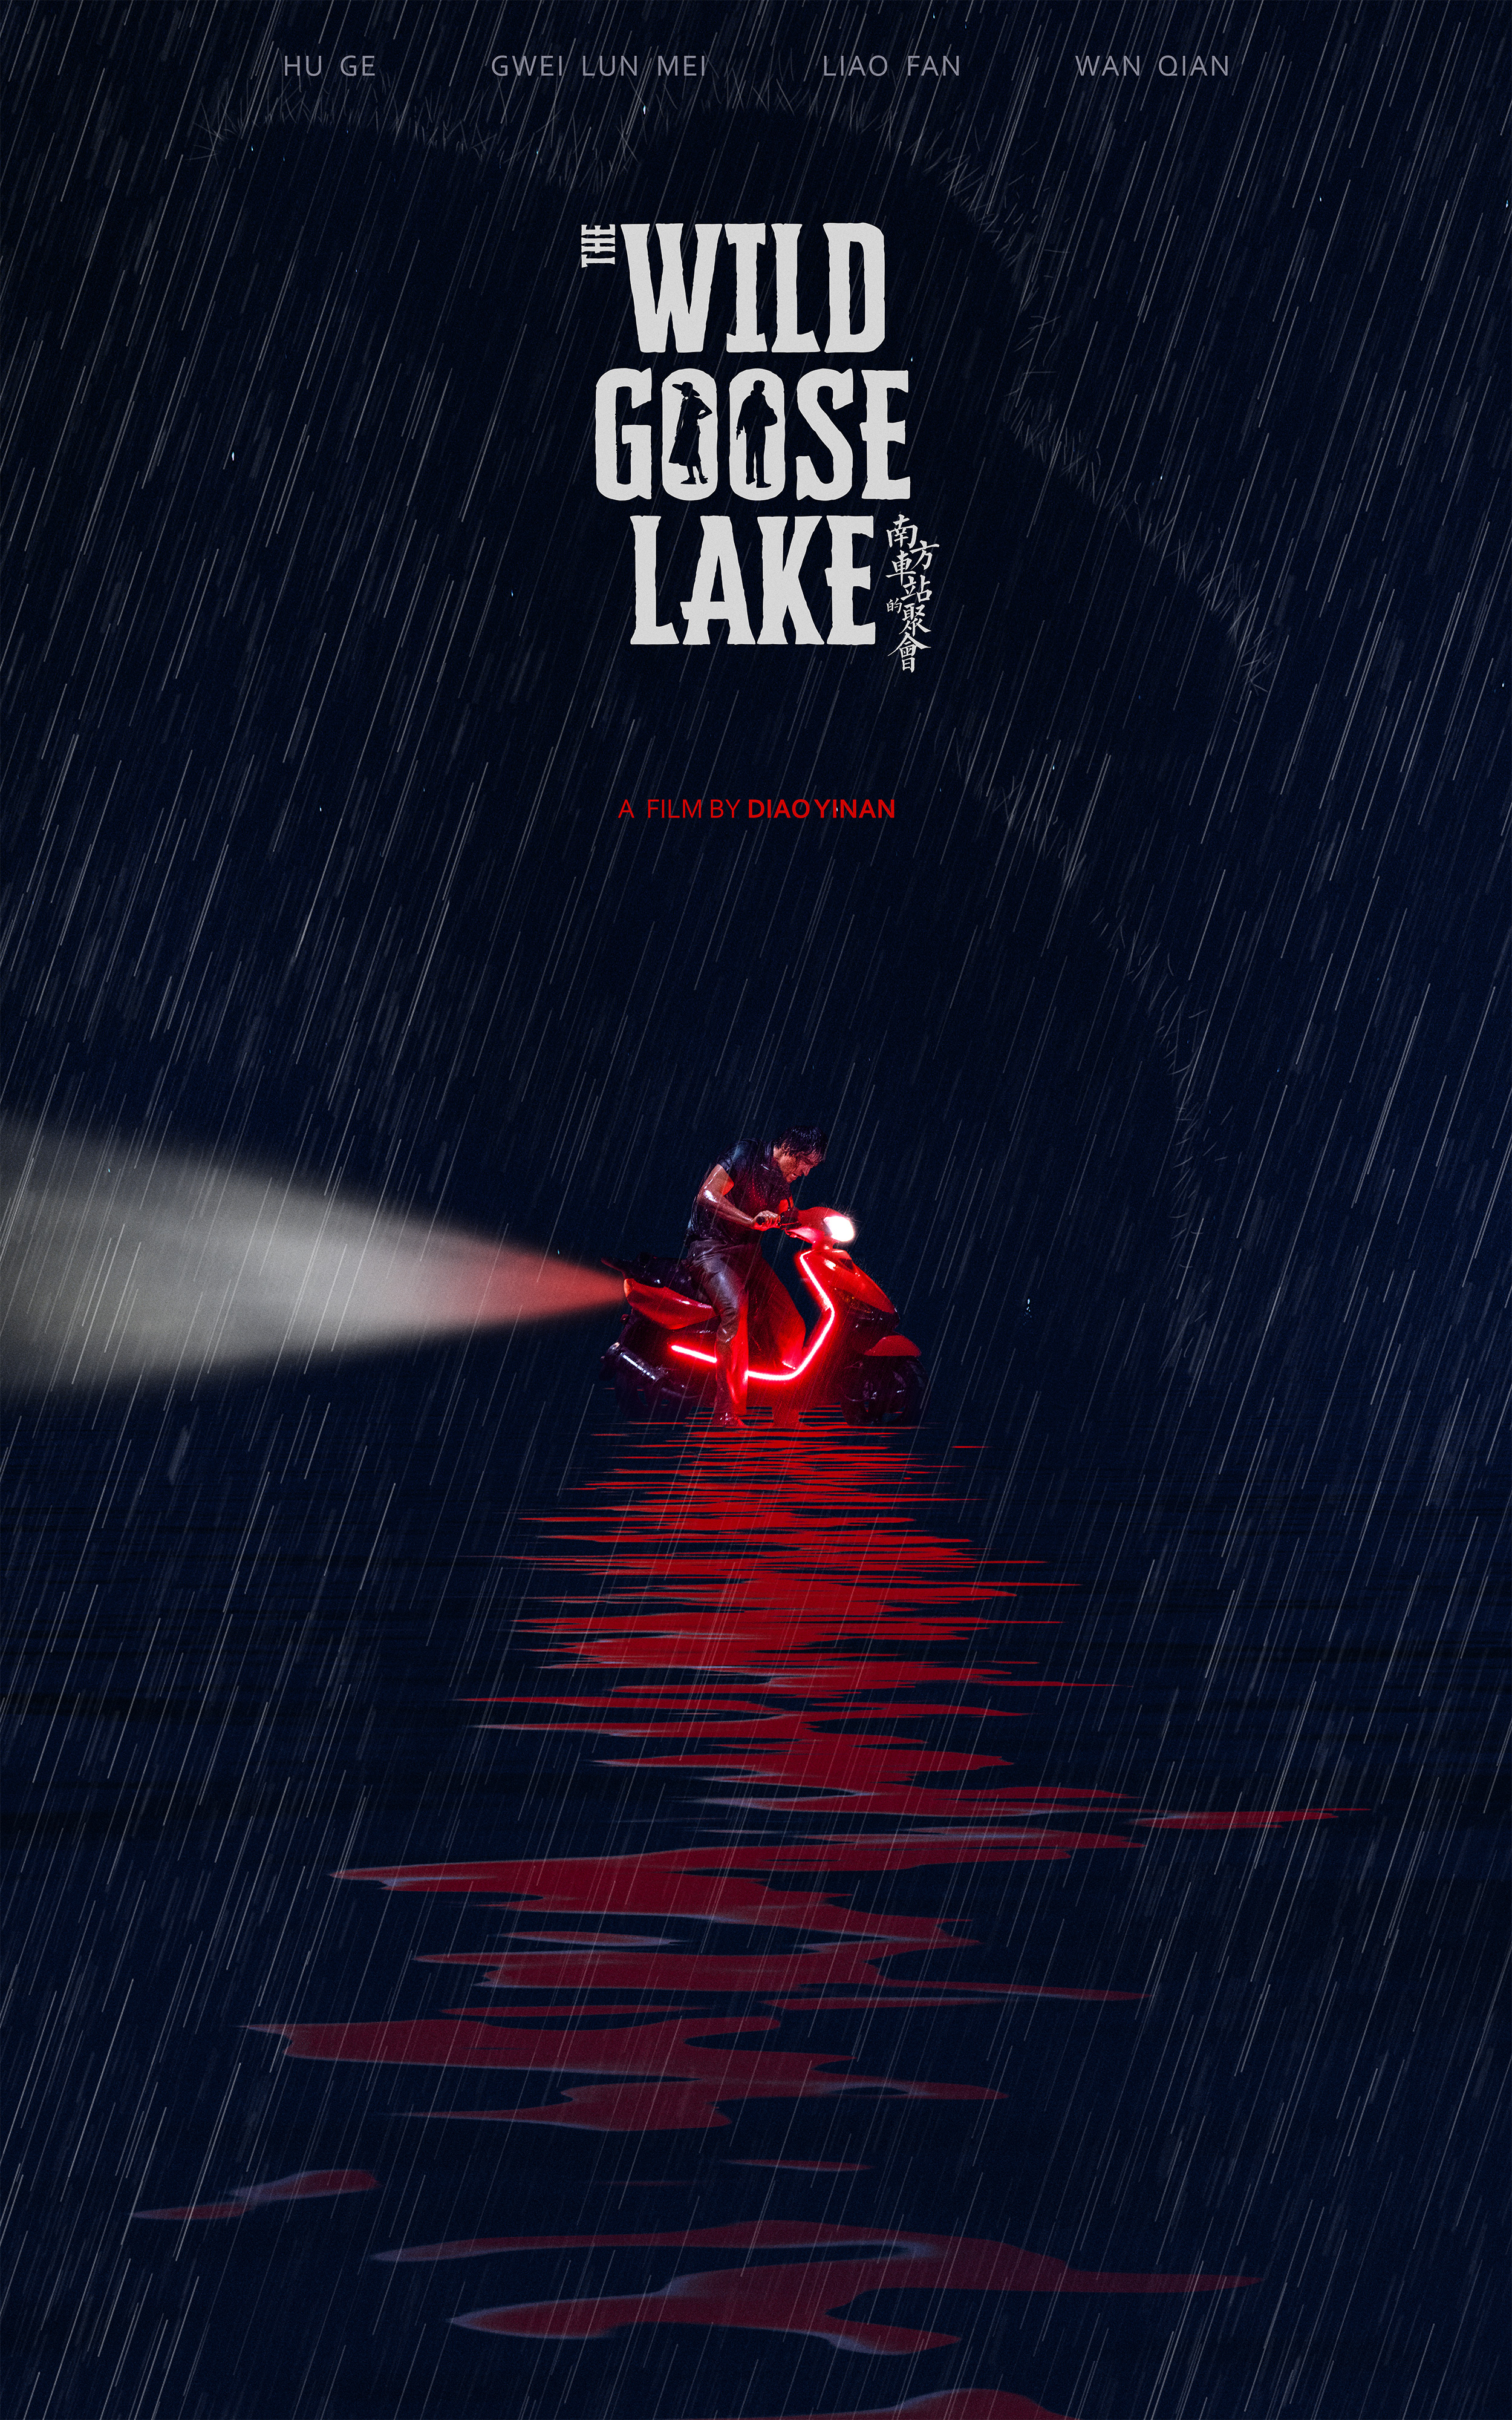 Nonton film The Wild Goose Lake layarkaca21 indoxx1 ganool online streaming terbaru